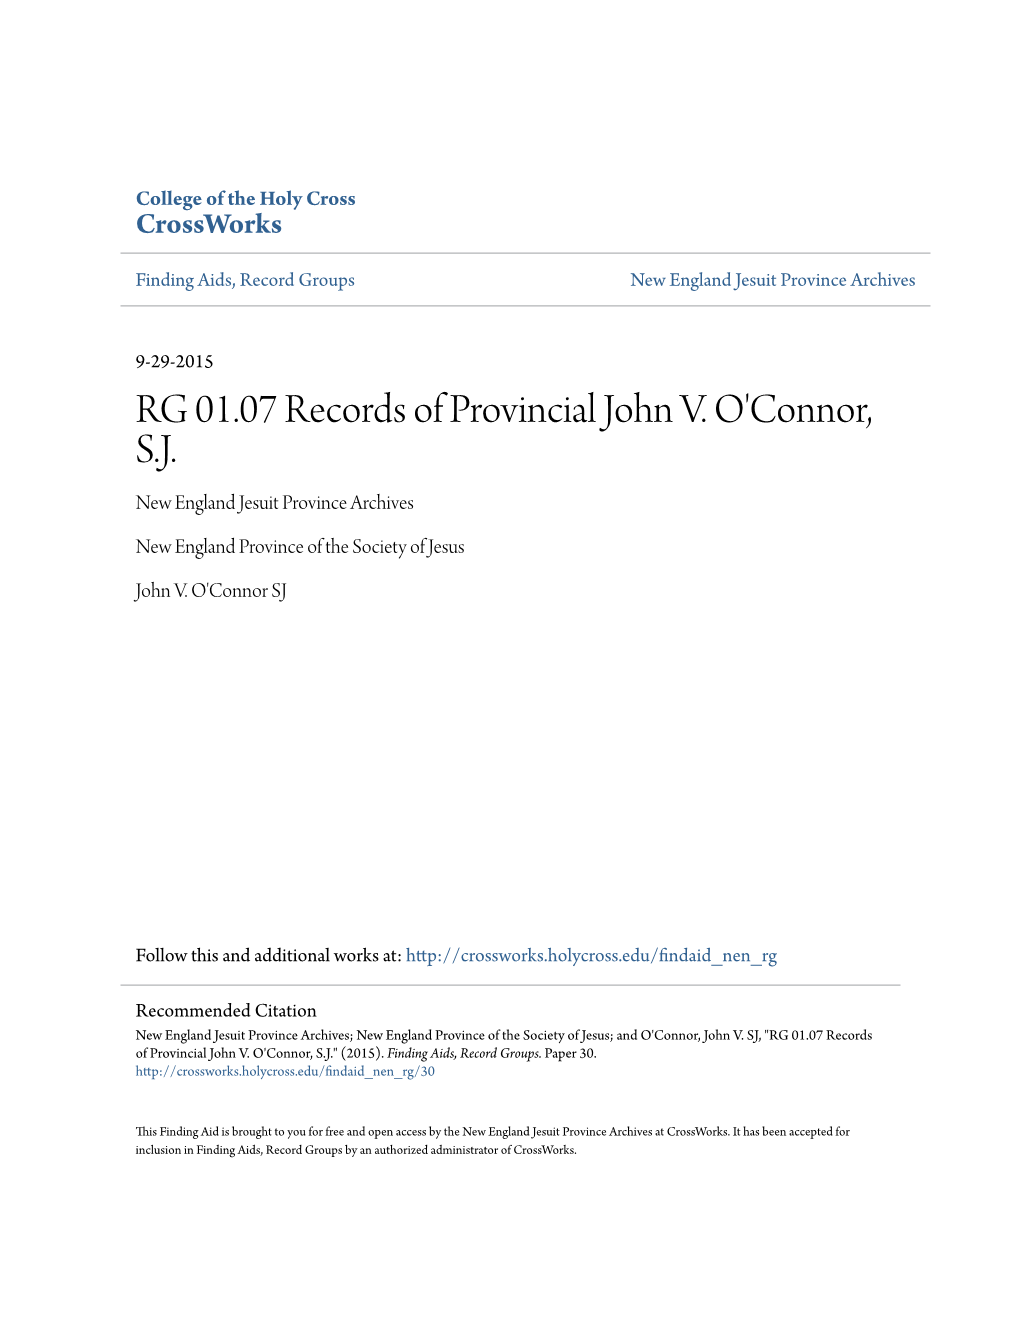 RG 01.07 Records of Provincial John V. O'connor, S.J. New England Jesuit Province Archives